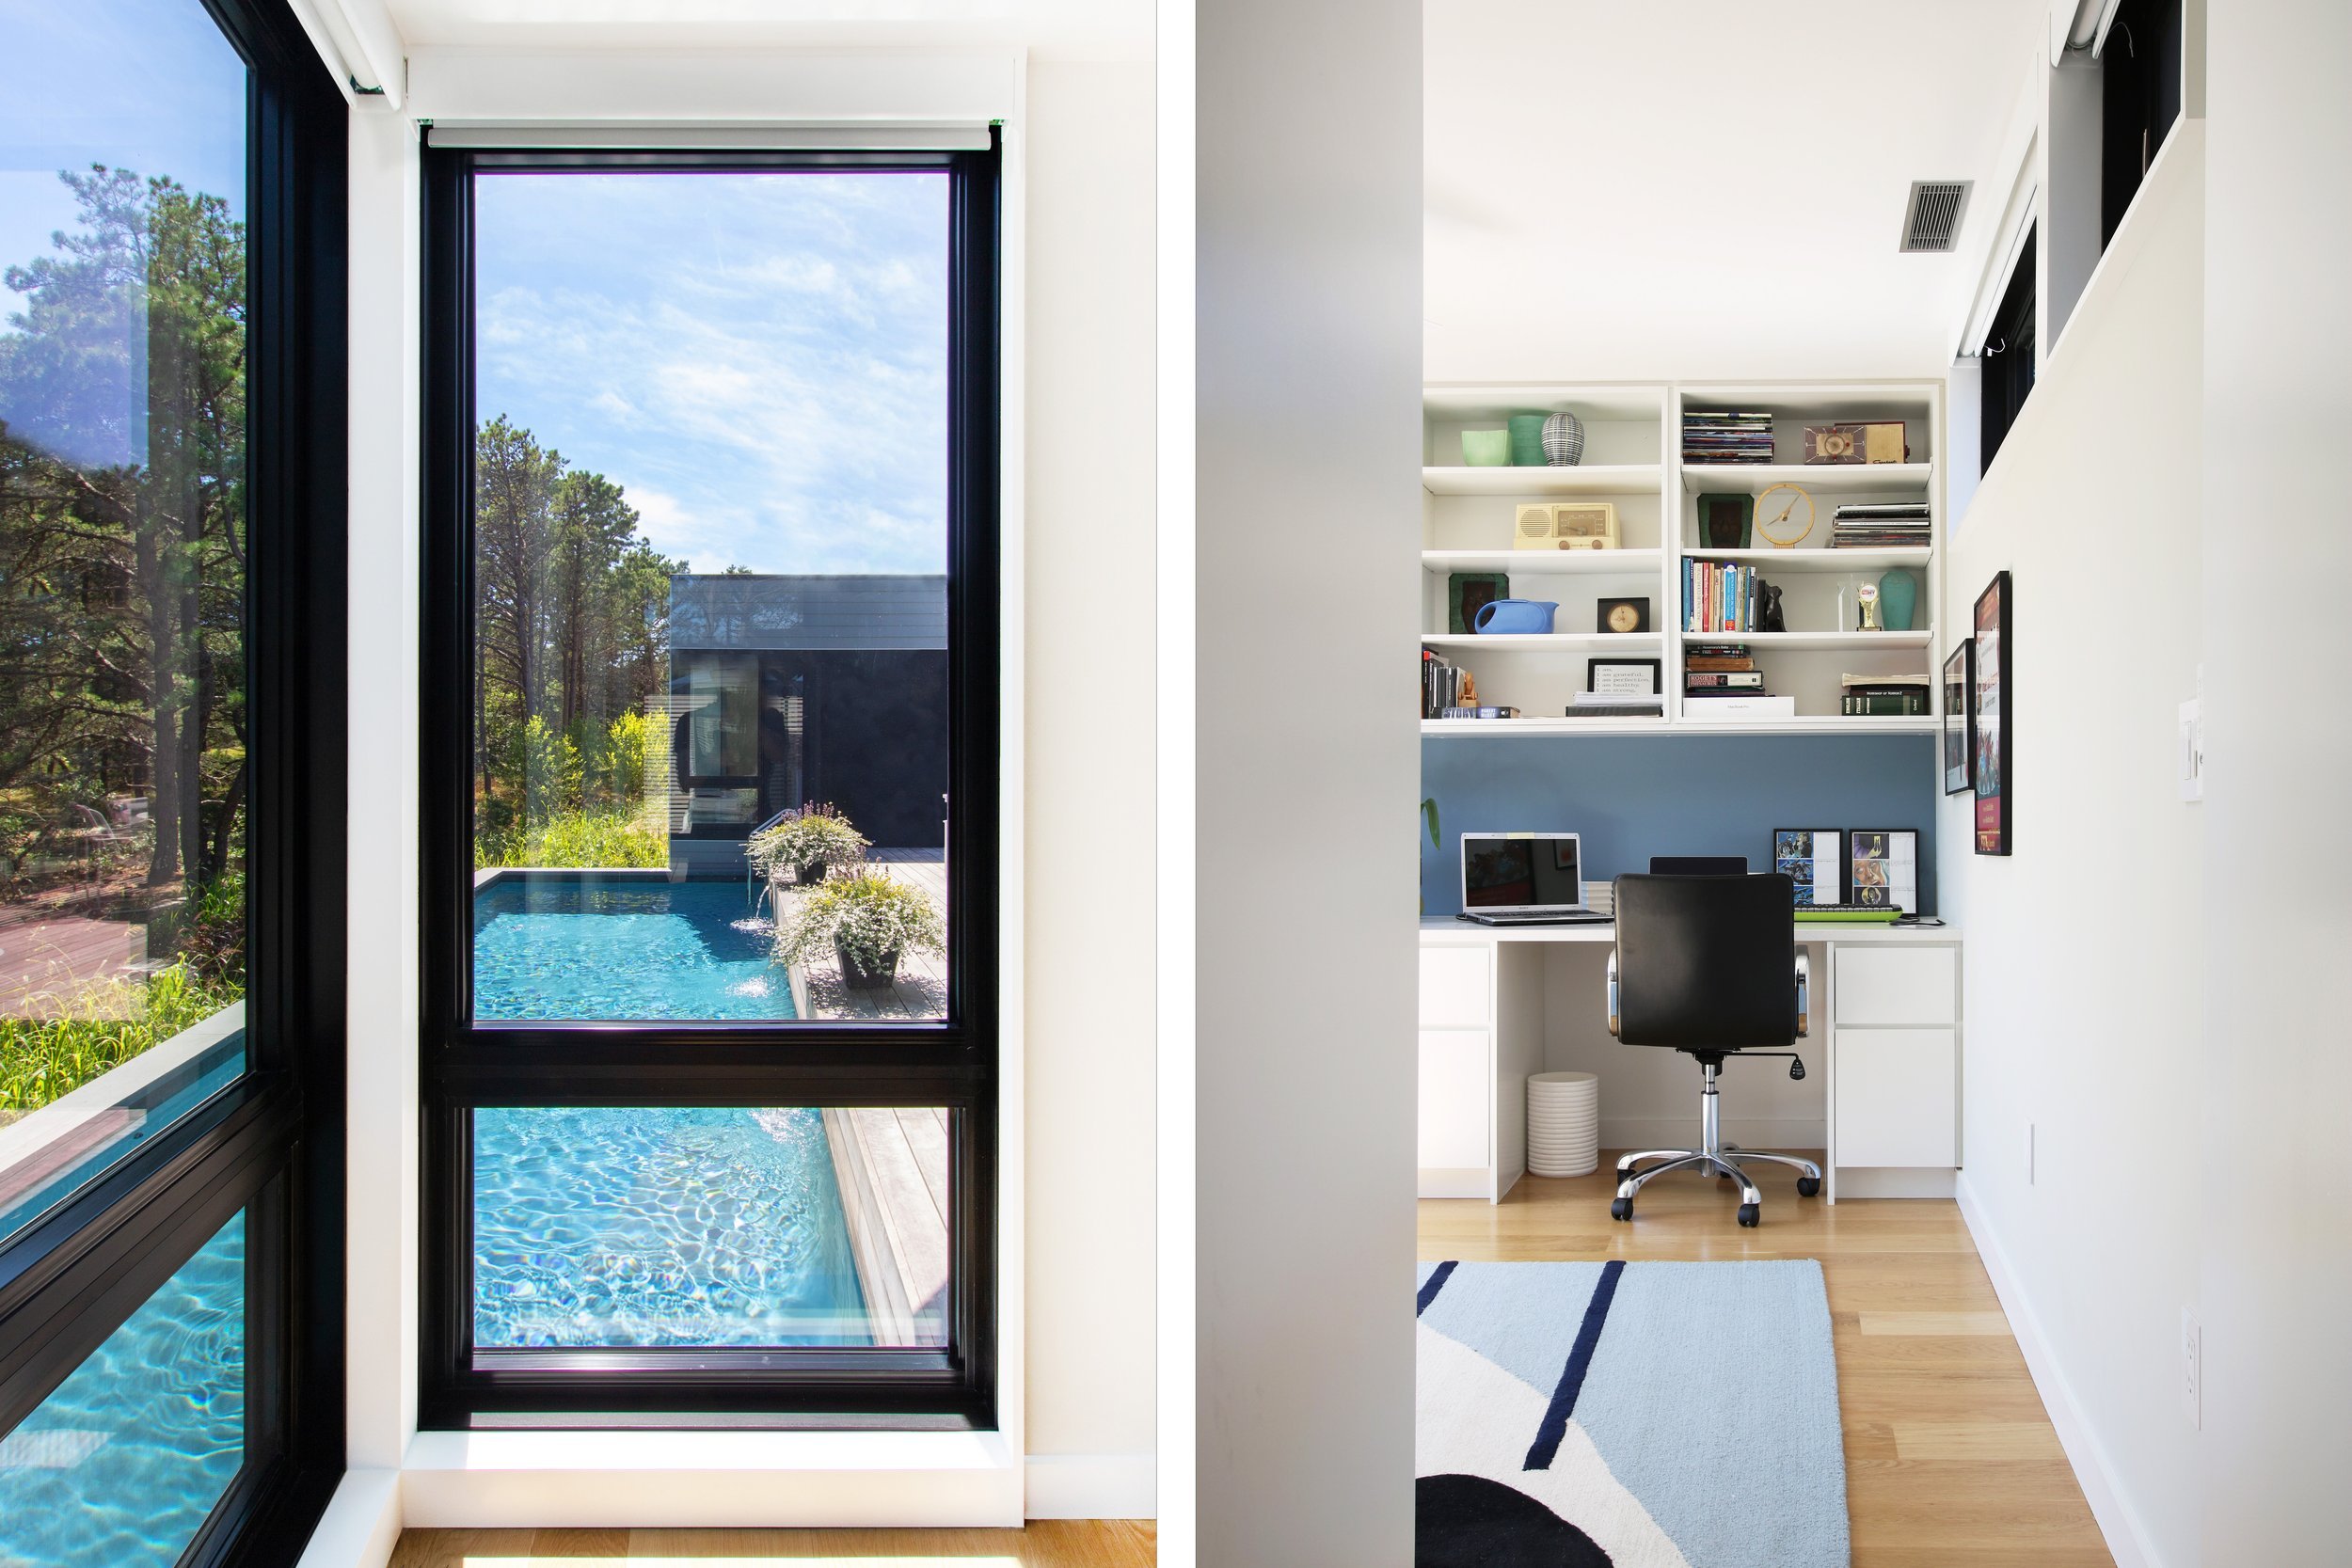 res4-resolution-4-architecture-modern-modular-prefab-amagansett-hamptons-whalers-residence-19-den-pool-home-office.jpeg